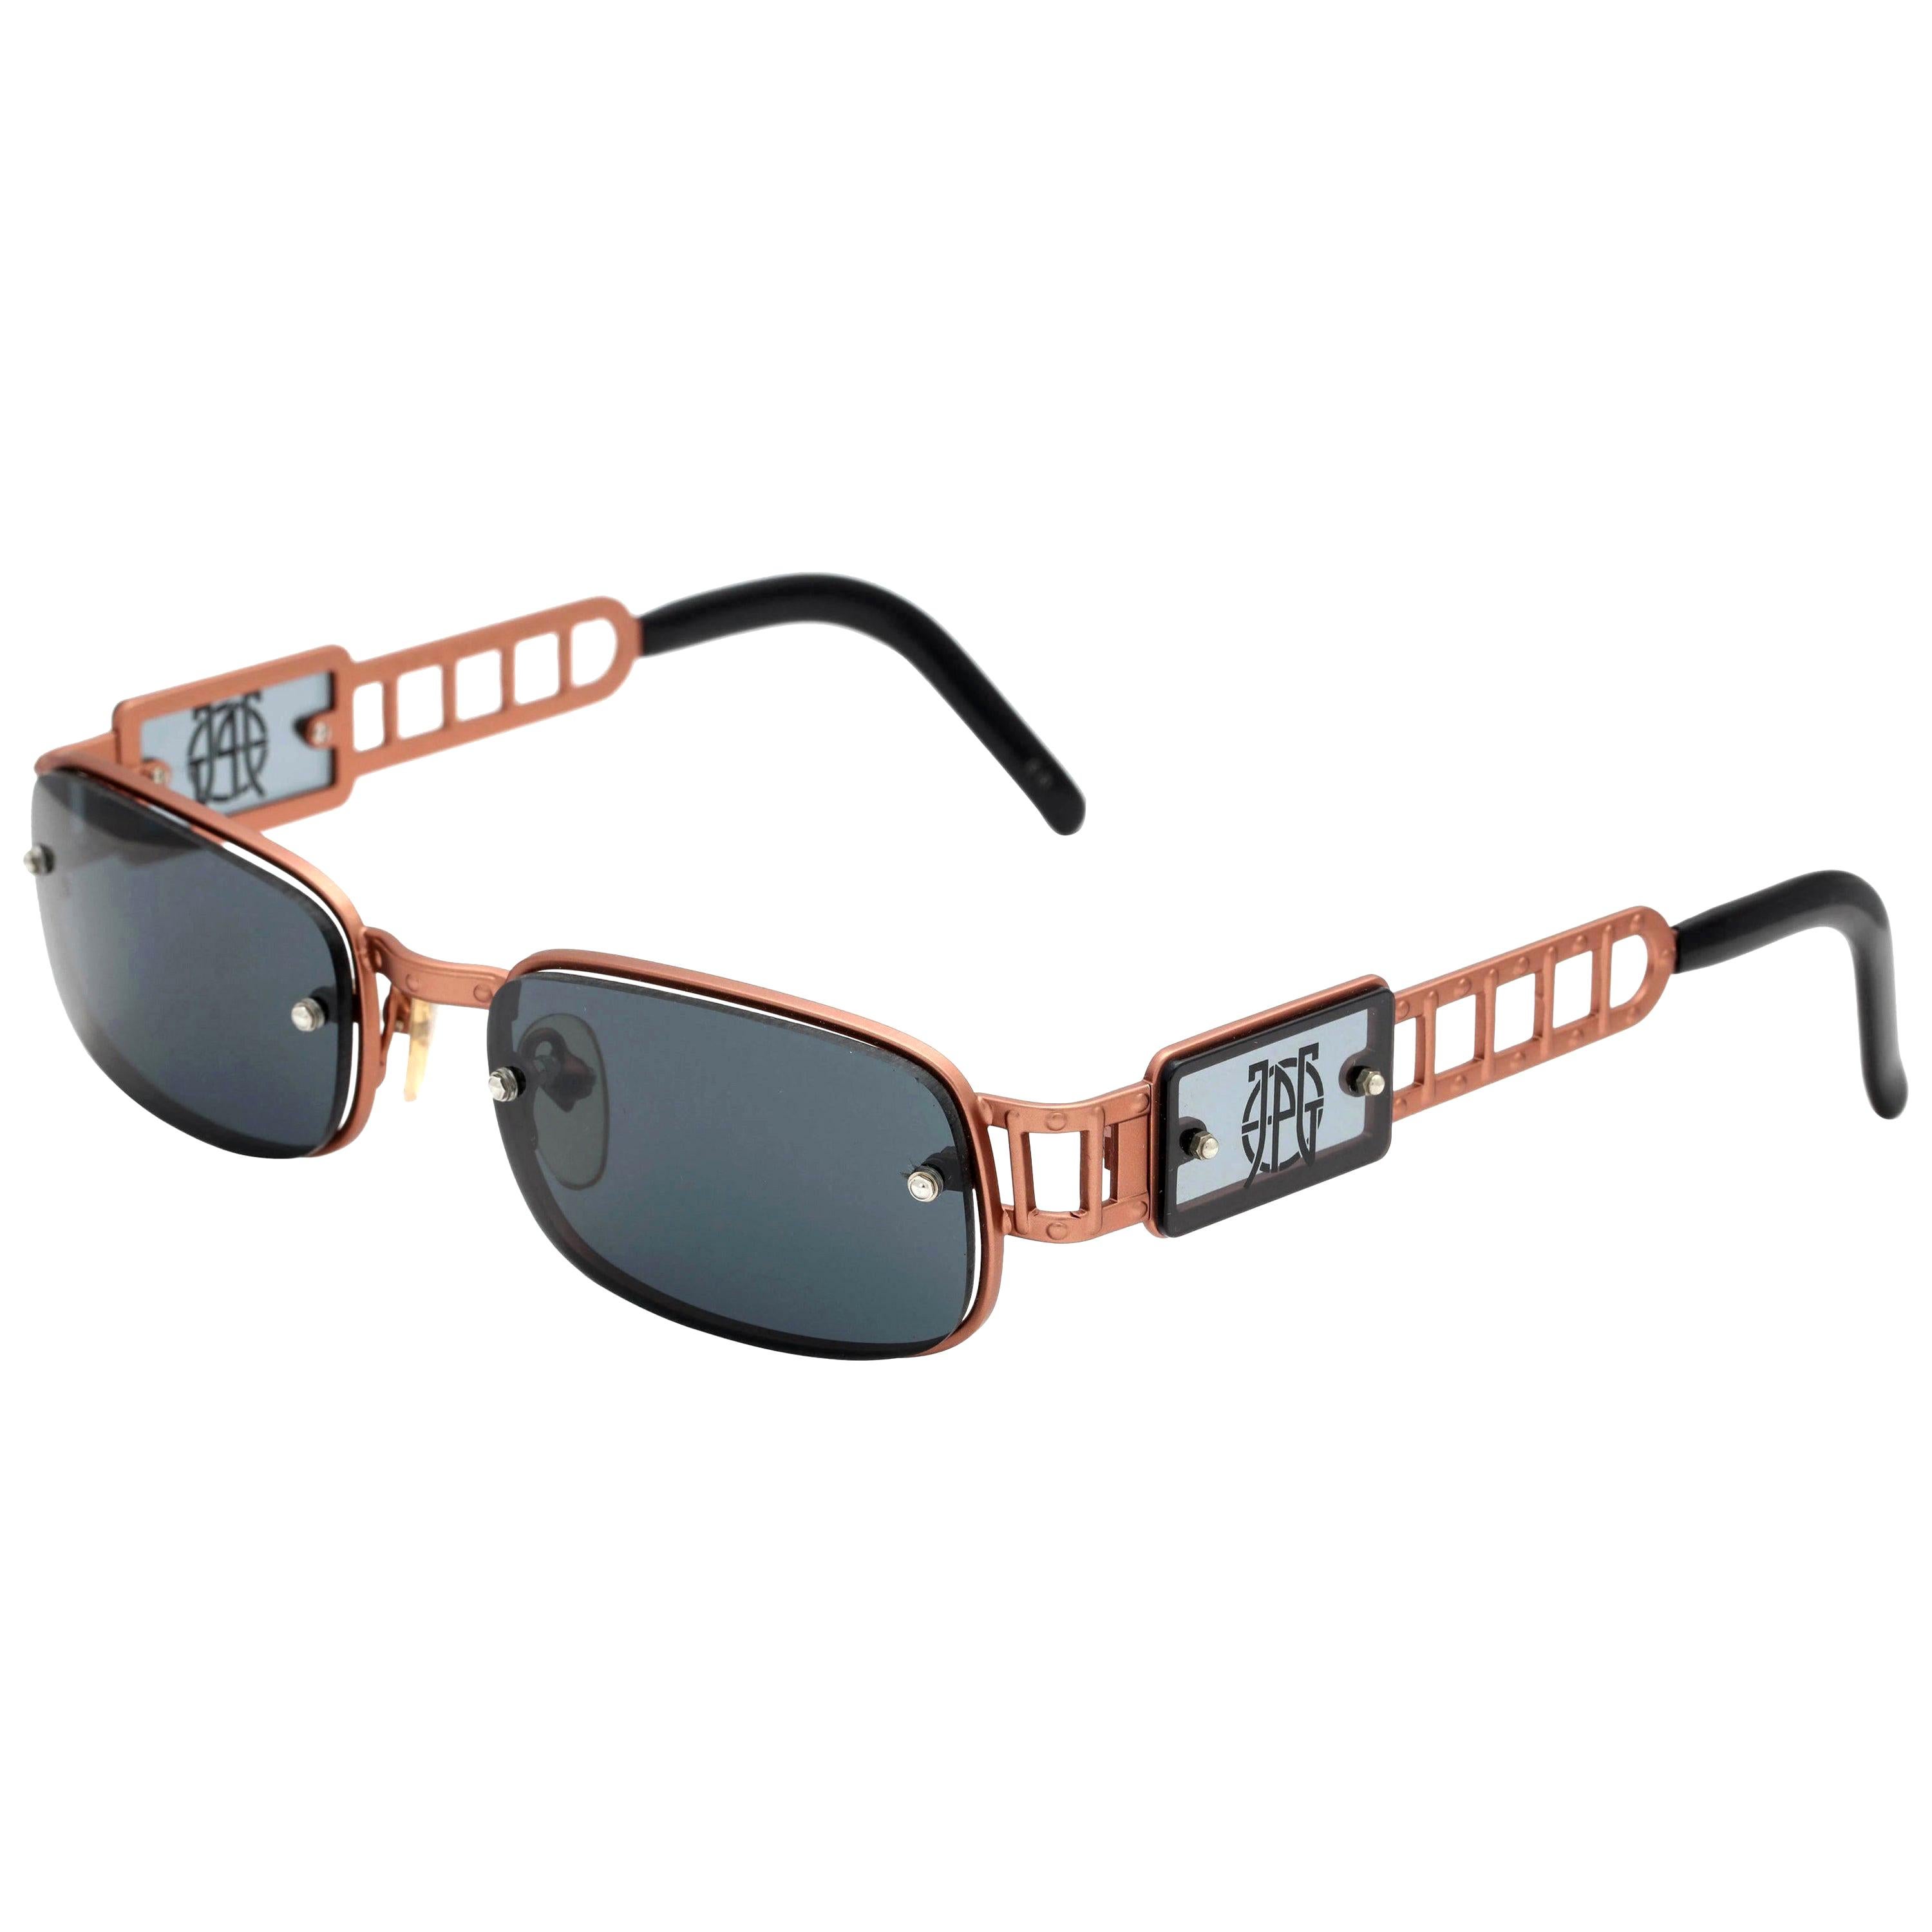 Vintage Jean Paul Gaultier Sunglasses 58-6103 For Sale